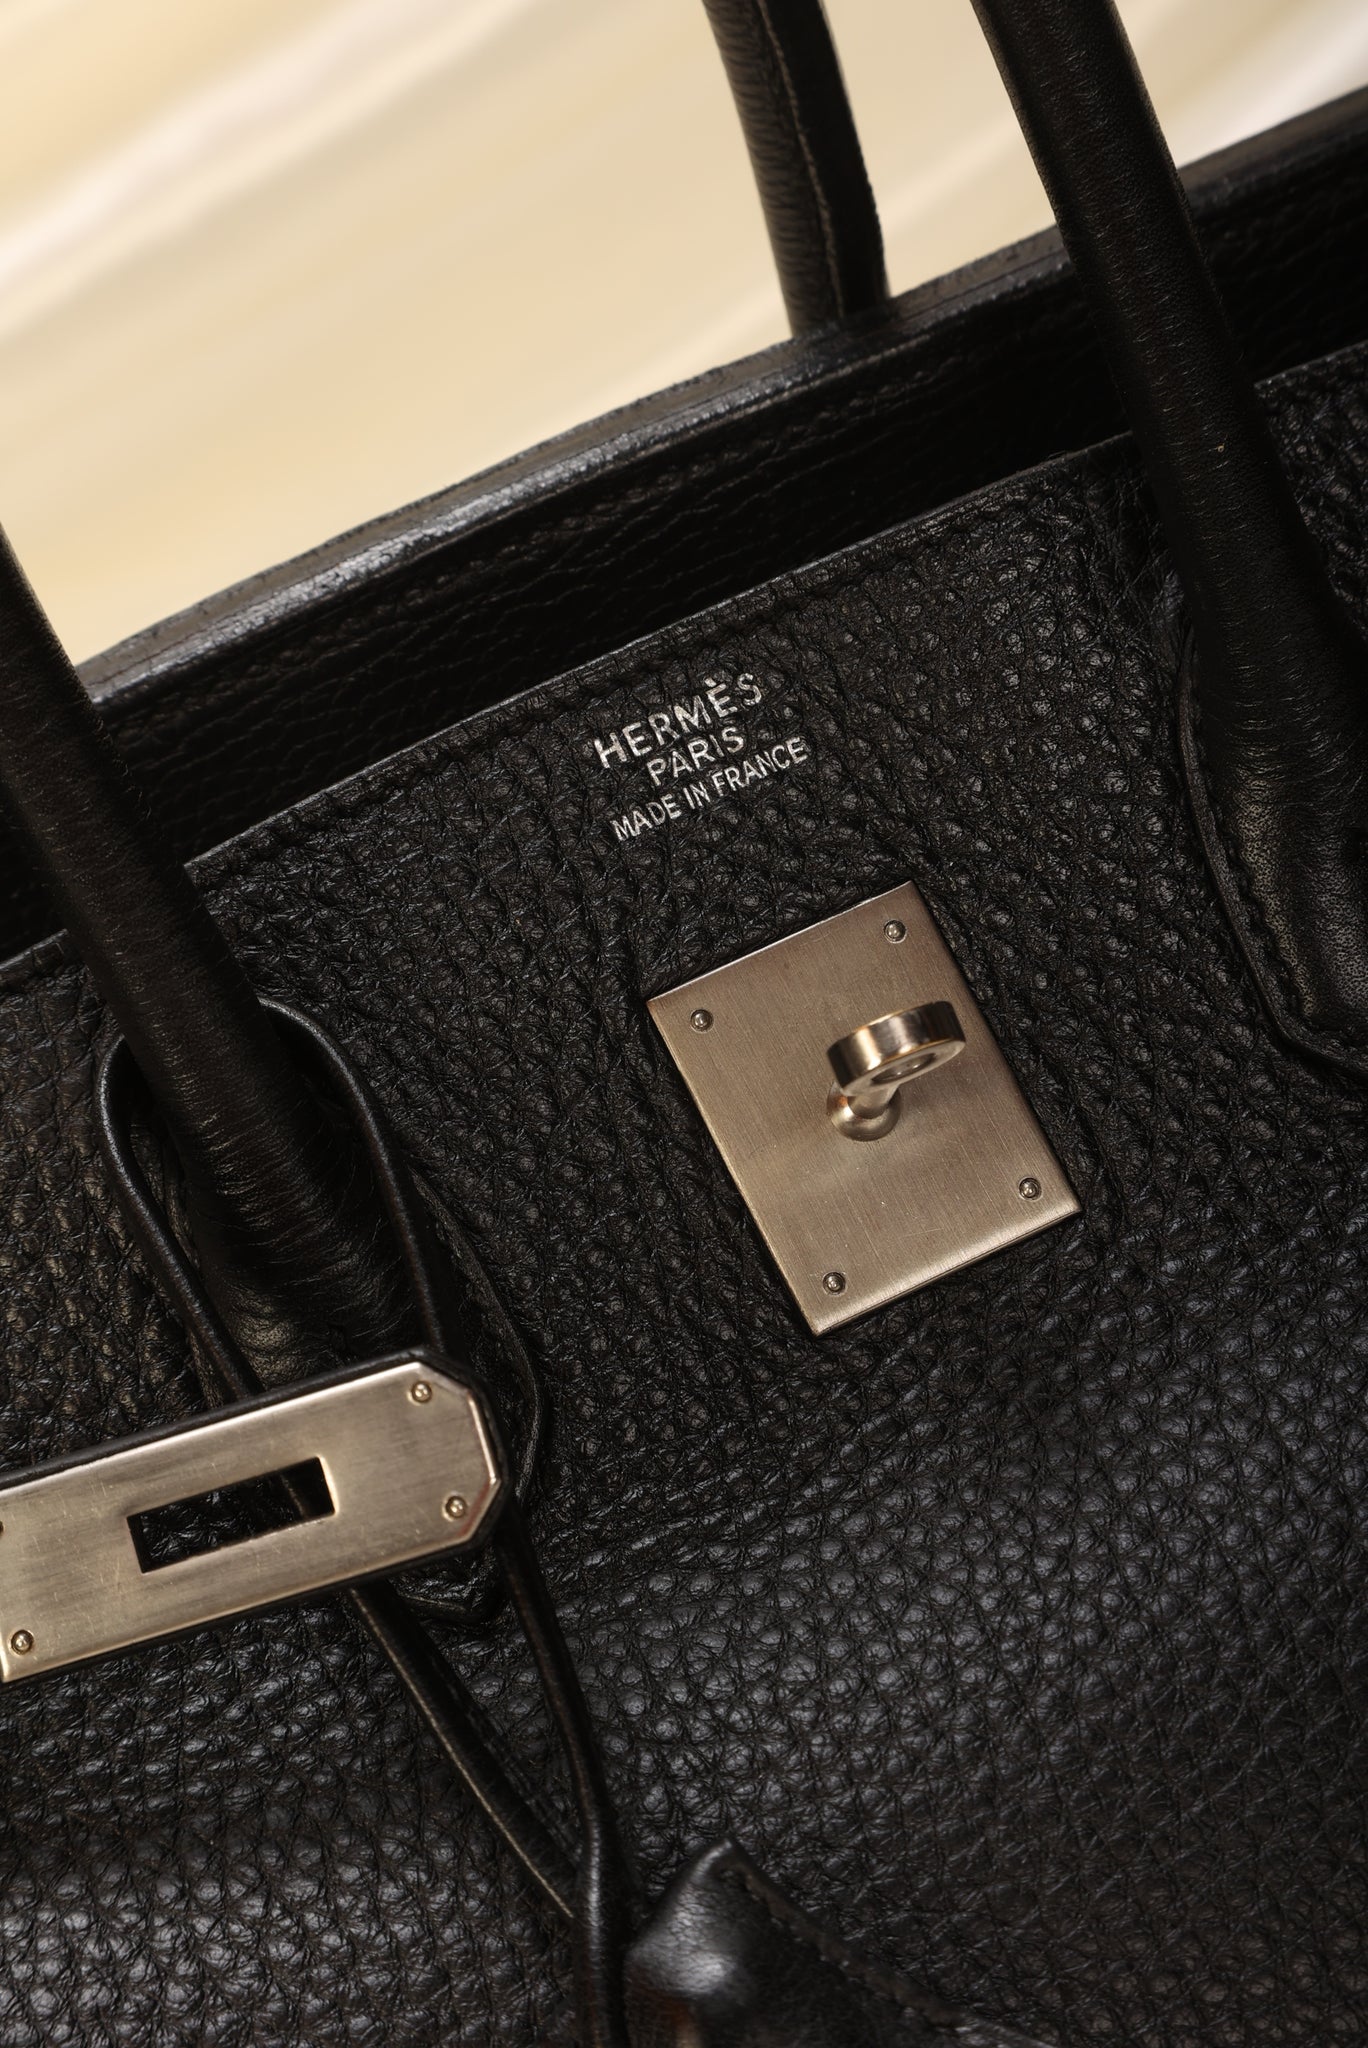 The Birkin 35: Effortlessly Merging Quiet Luxury and Big Bag